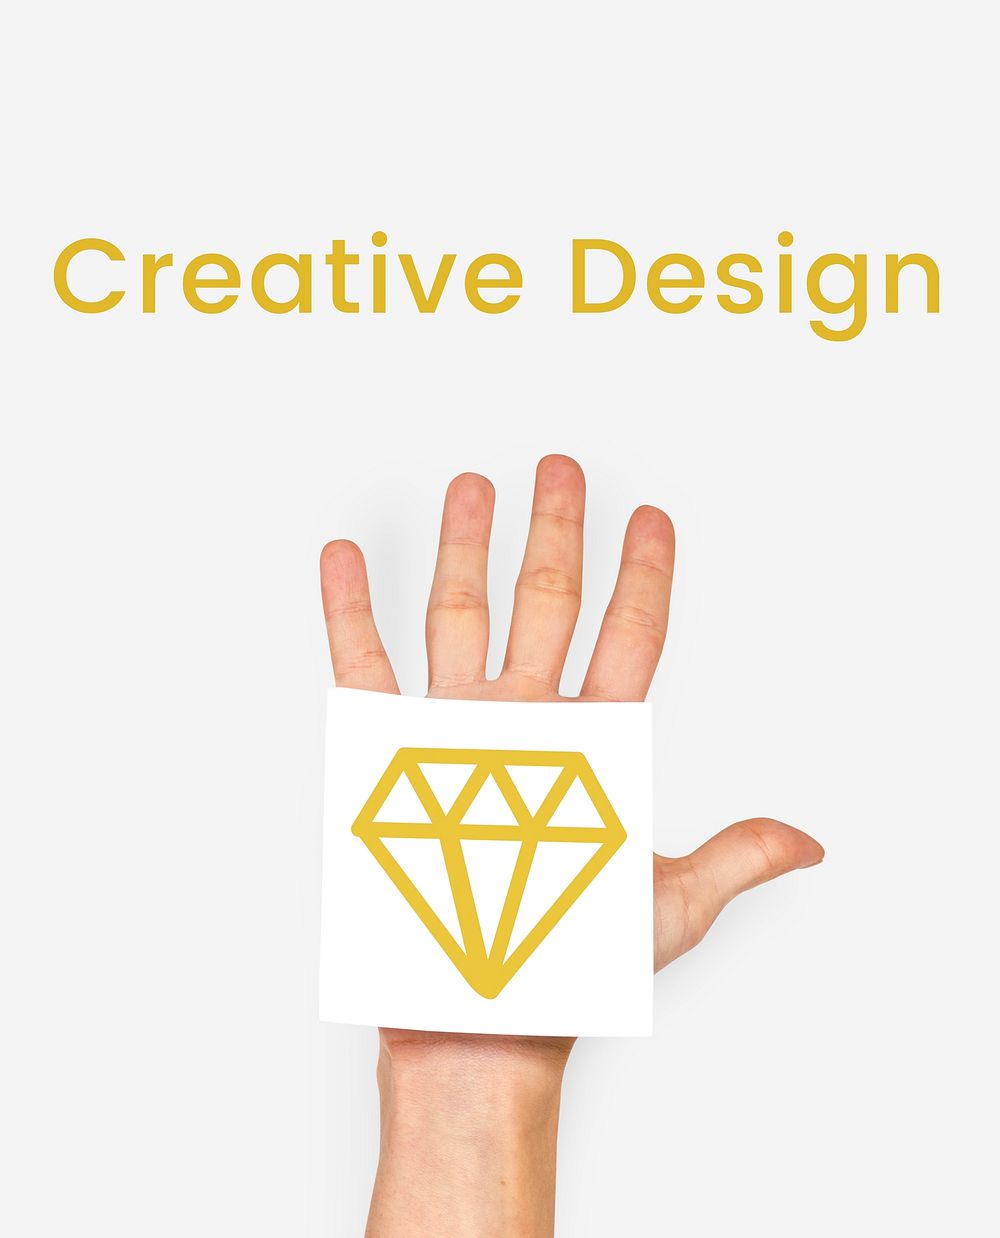 Graphic of creative design with diamond symbol